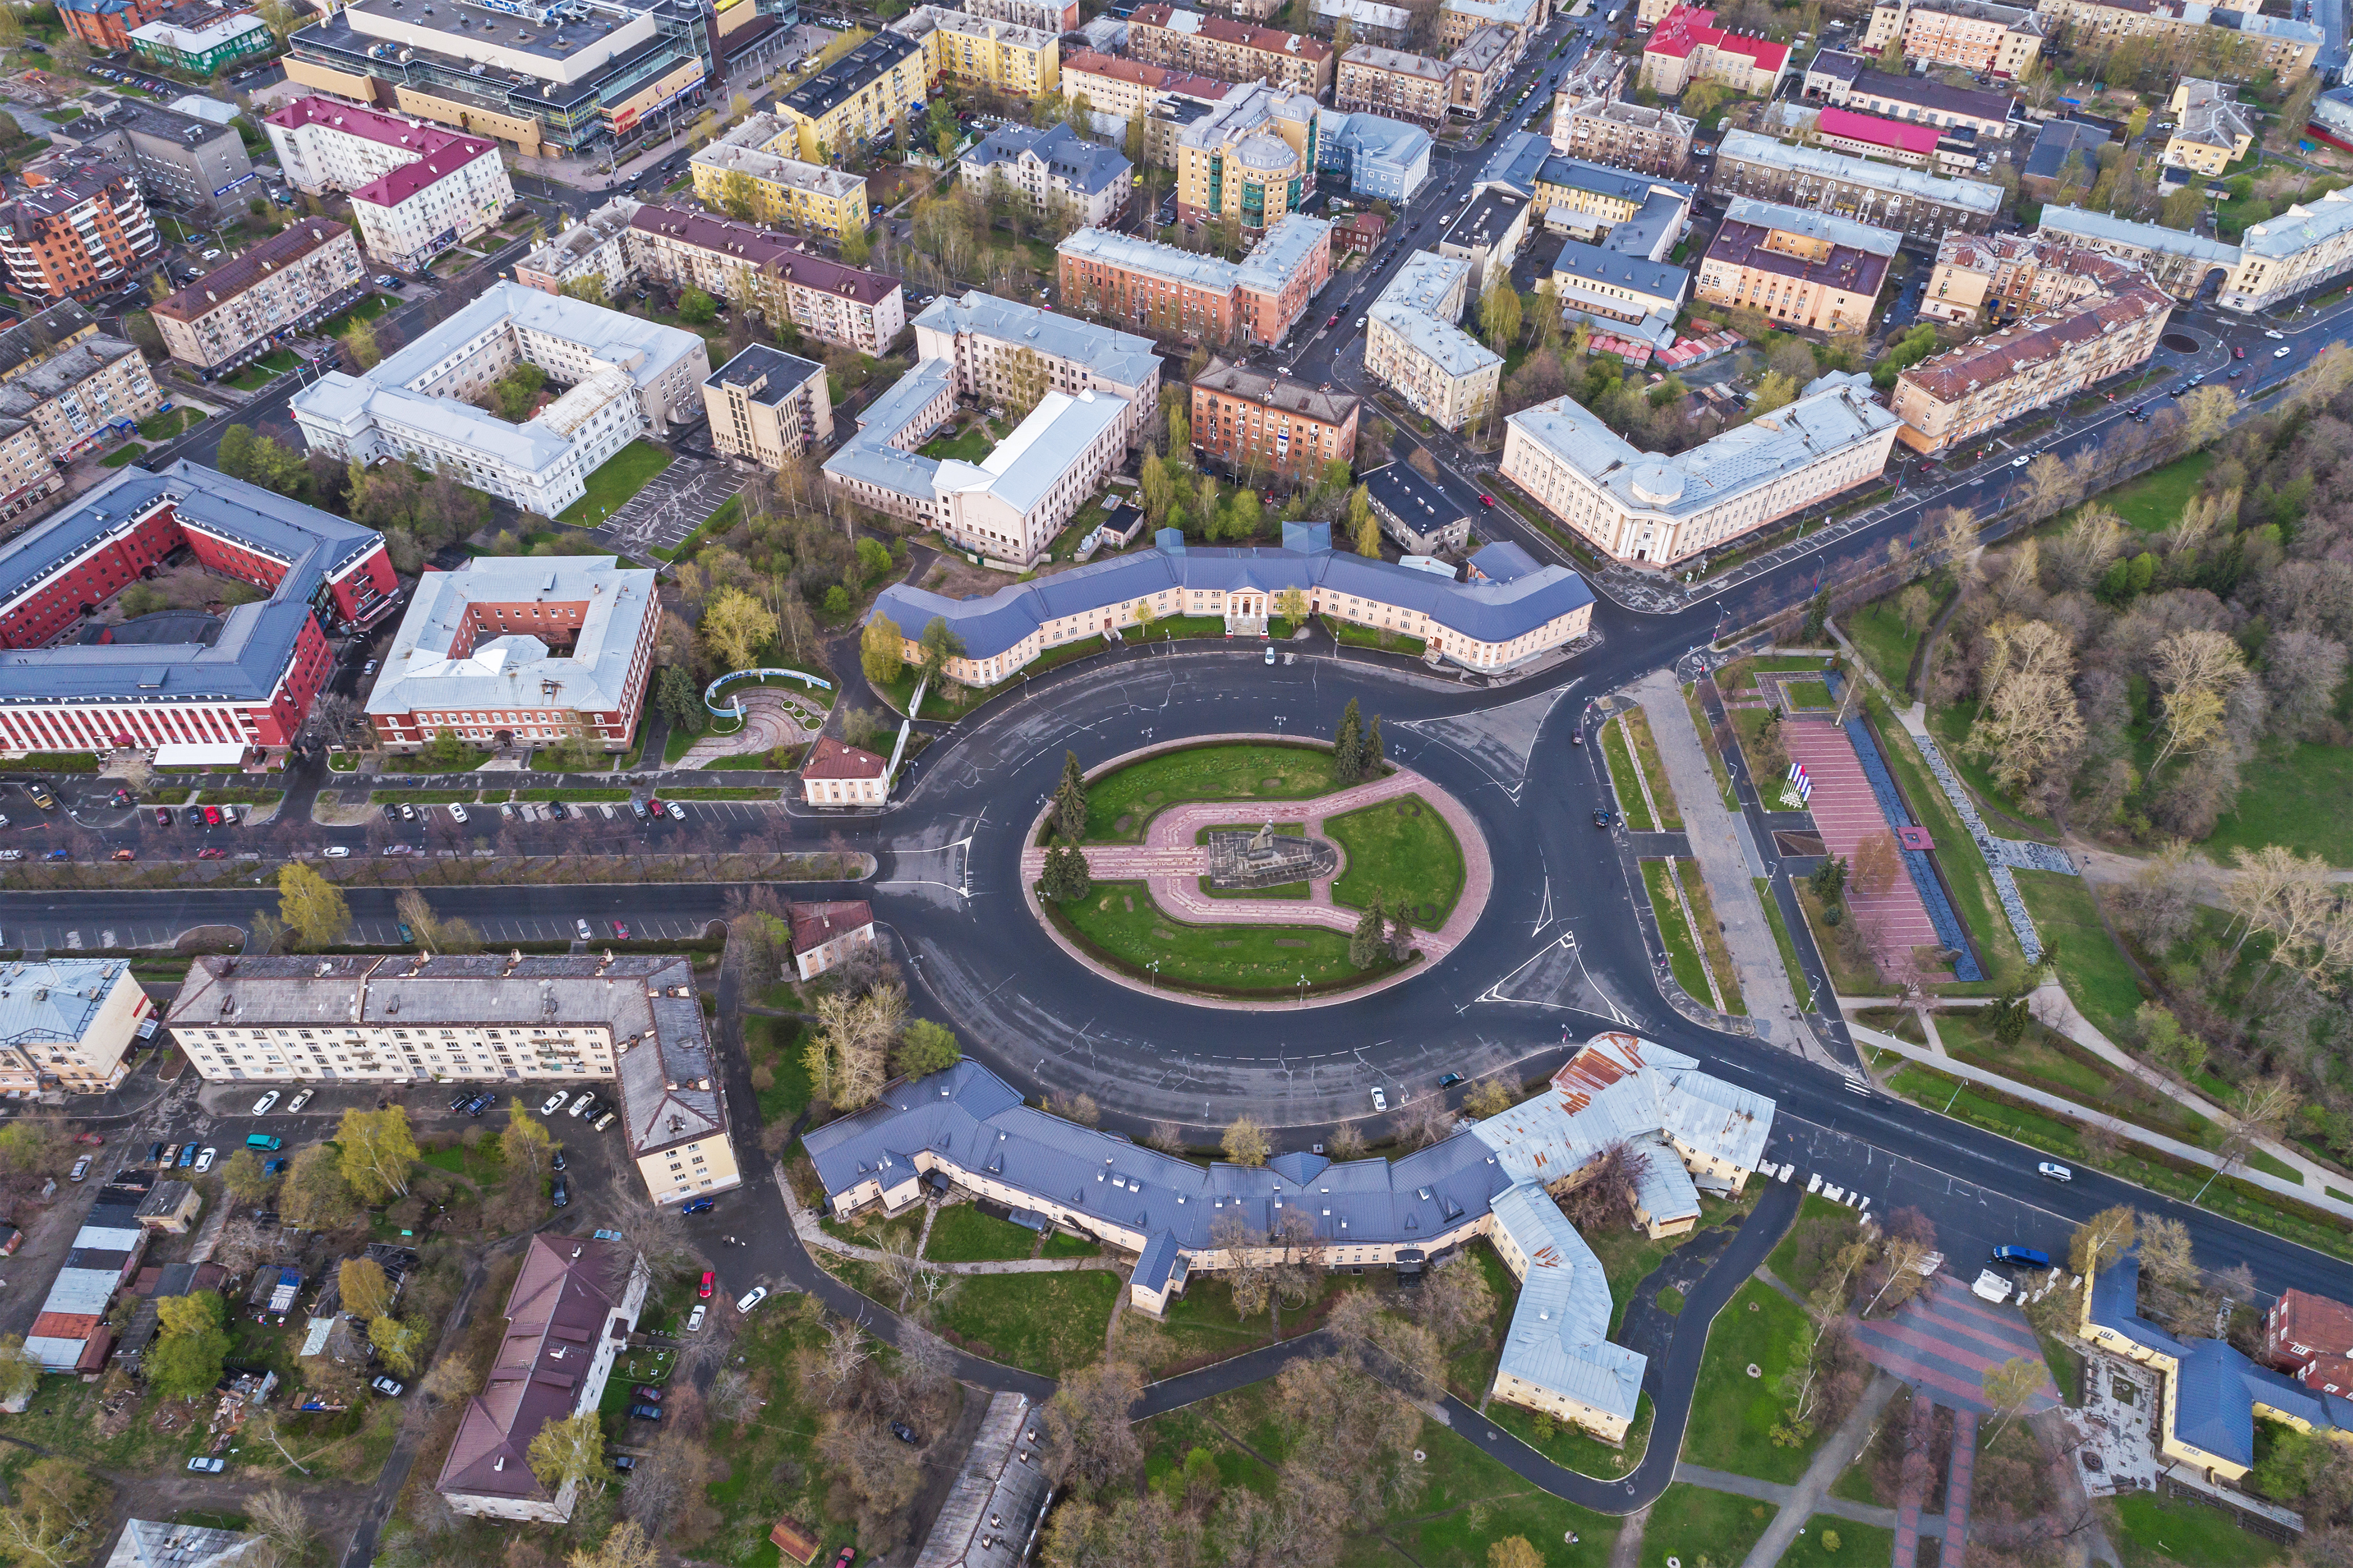 Площадь Ленина Петрозаводск